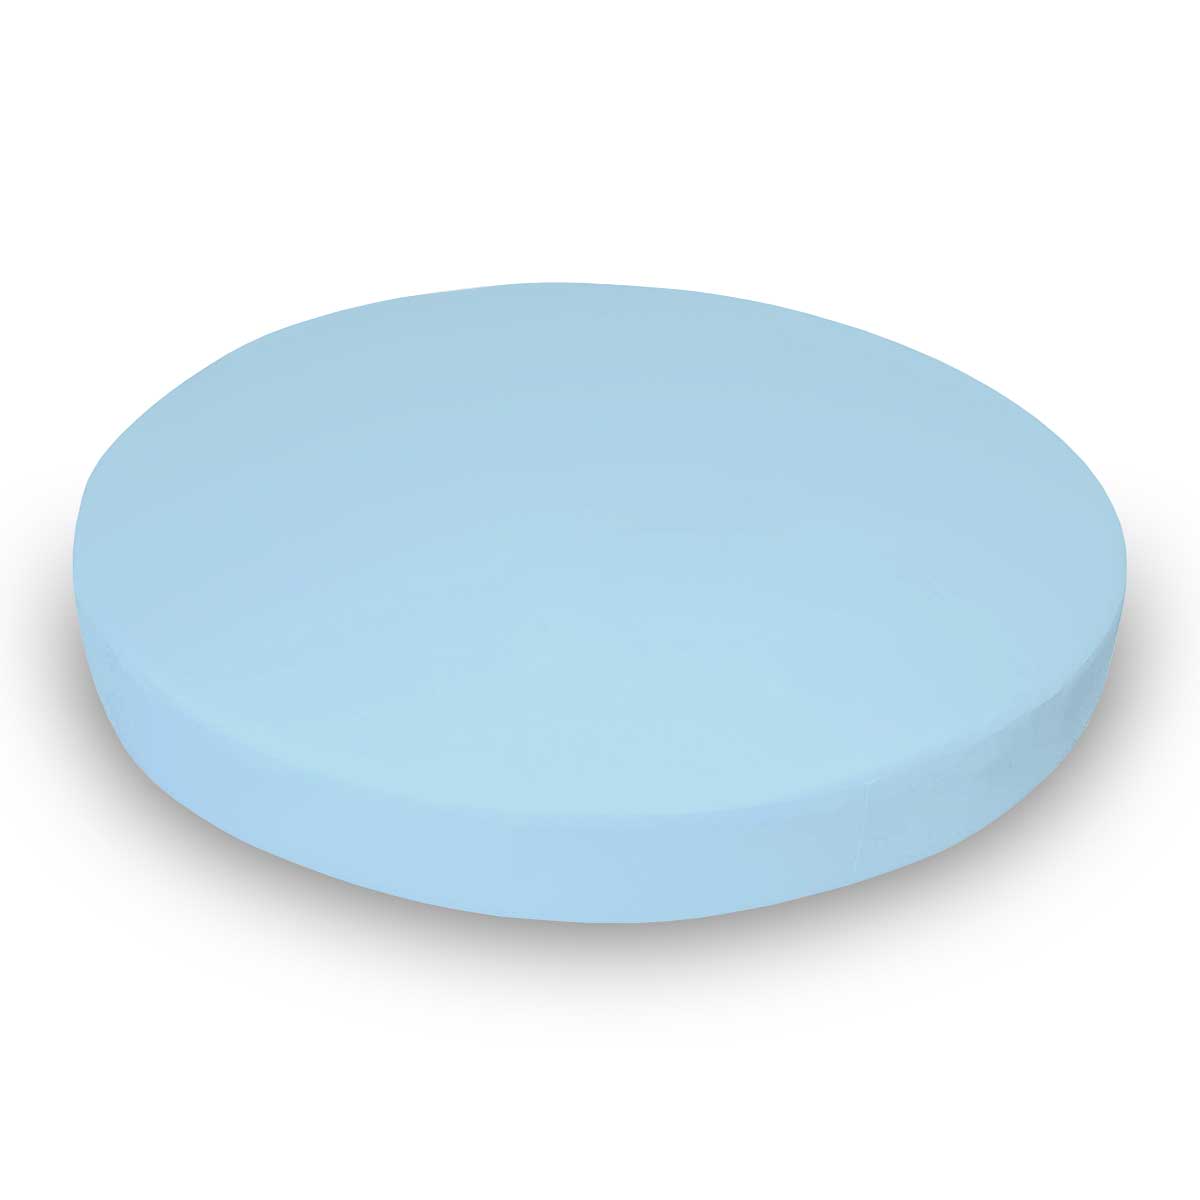 Oval Crib (Stokke Sleepi) - Flannel FS9 - Aqua blue - Fitted  Oval